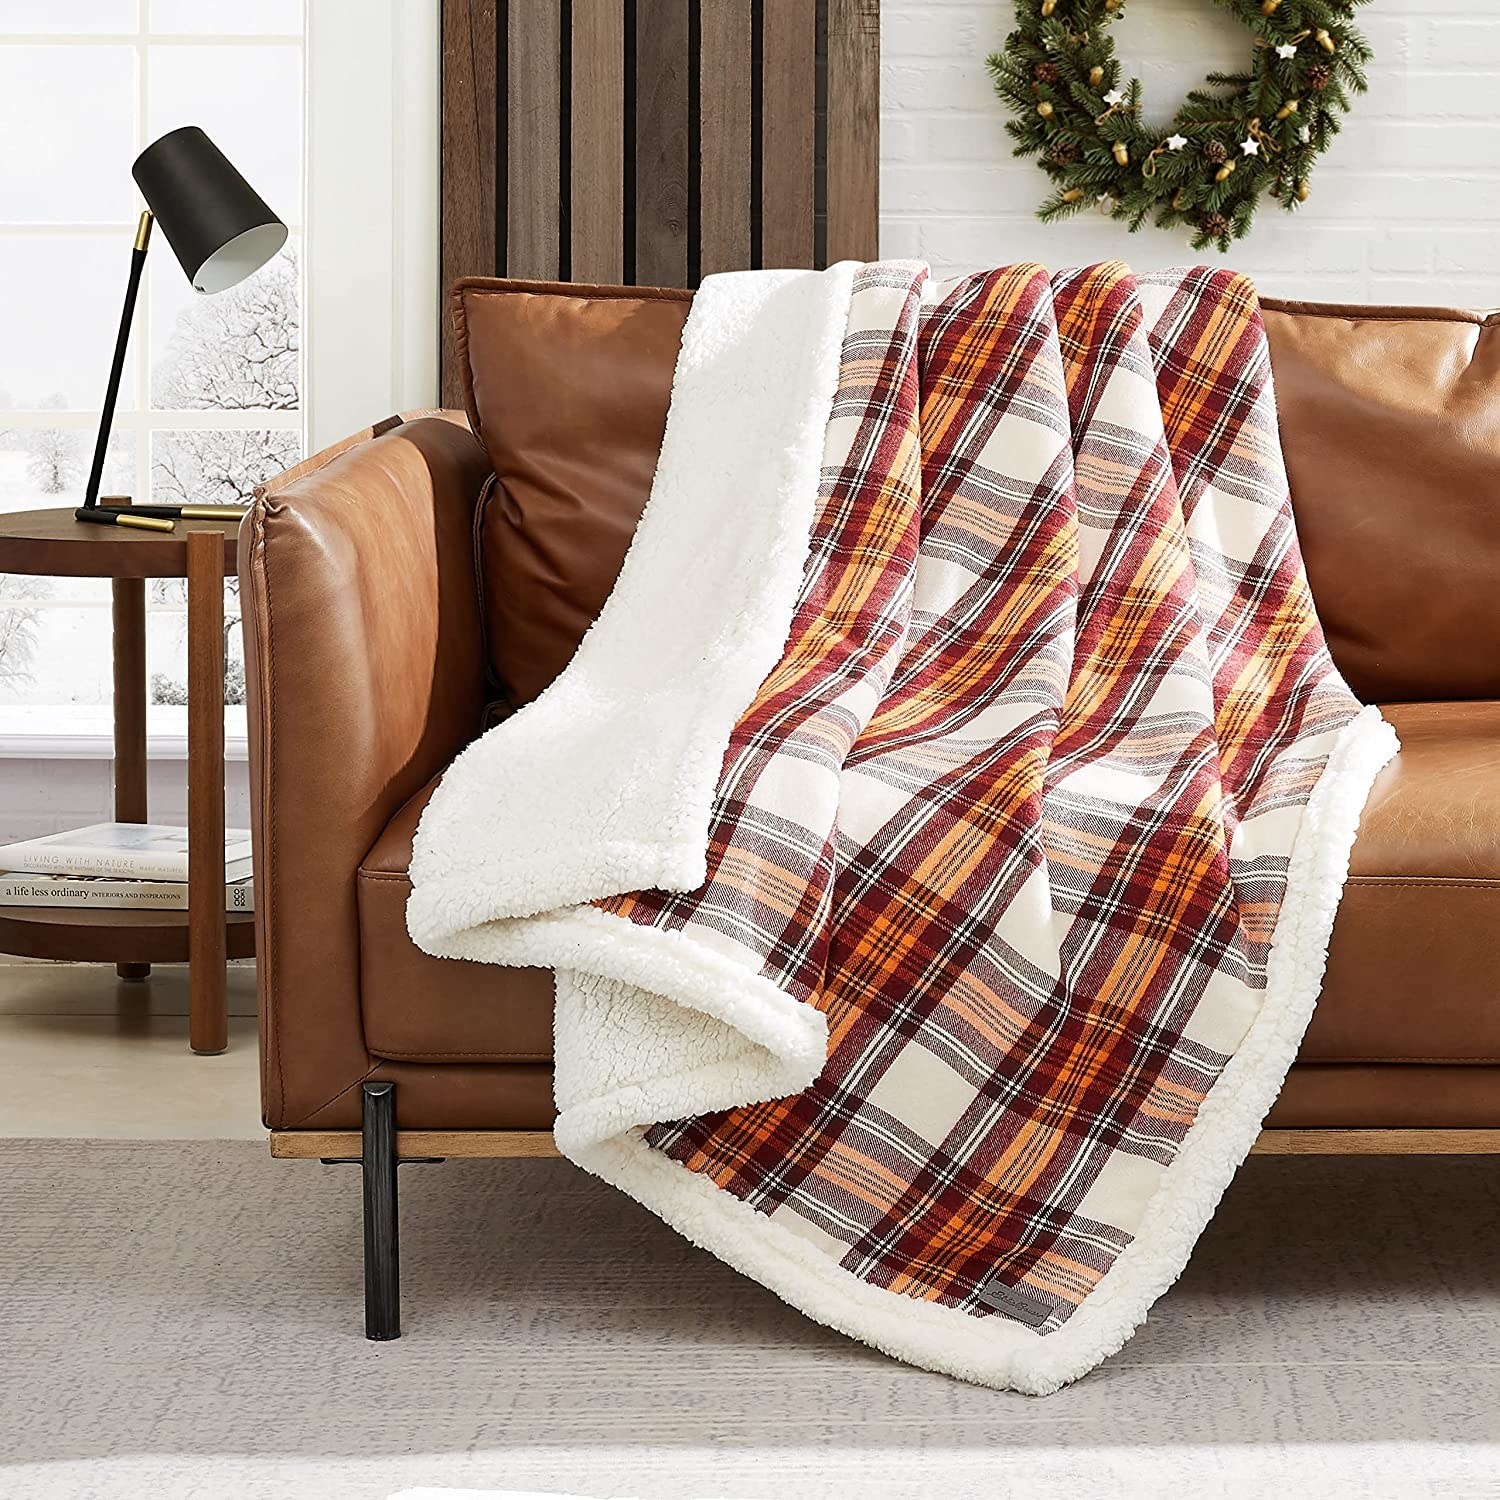 Eddie Bauer blanket placed on couch